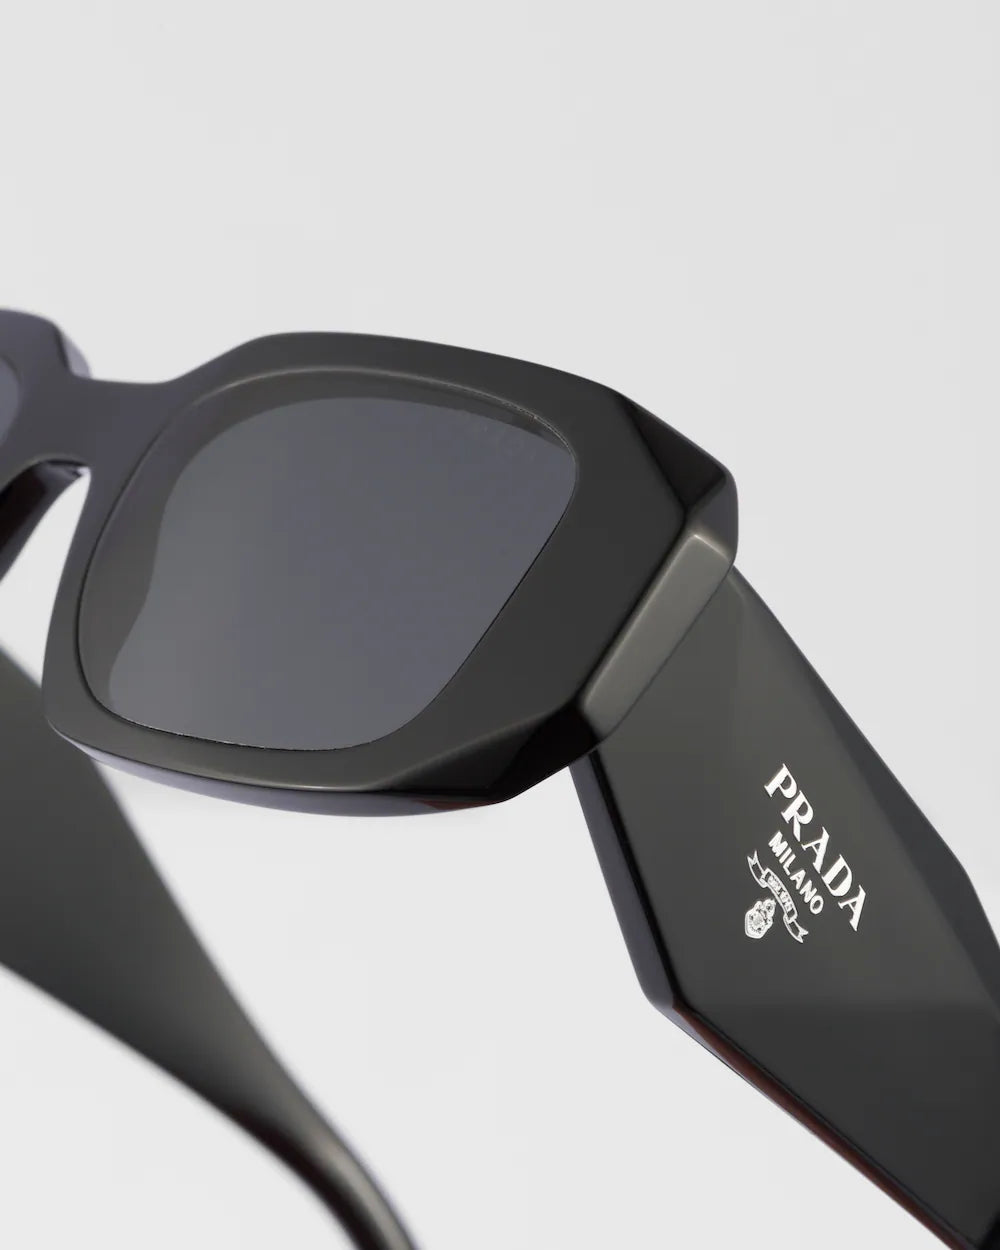 Prada Scultoreo Sunglasses Black 0PR 17WS